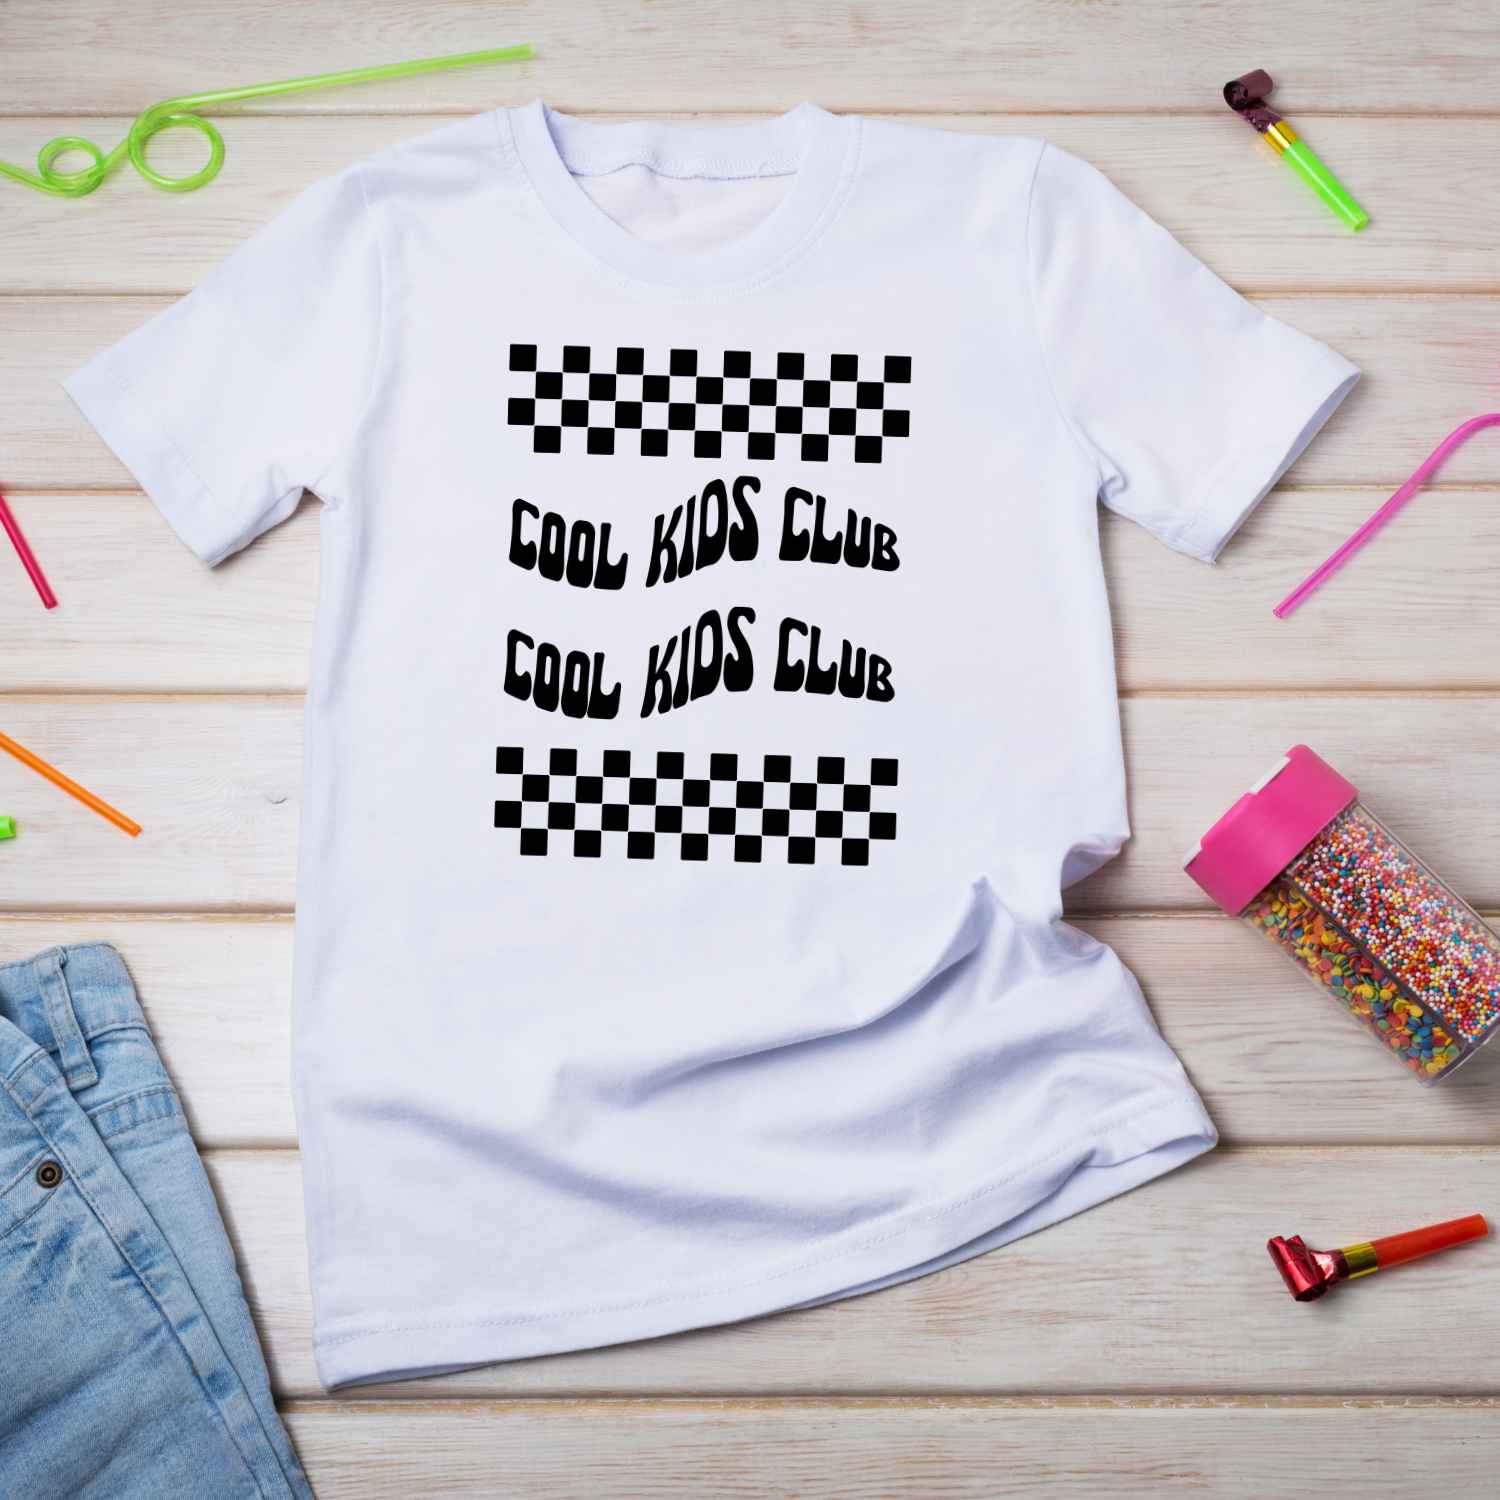 Cool Kids Club T-shirt Design